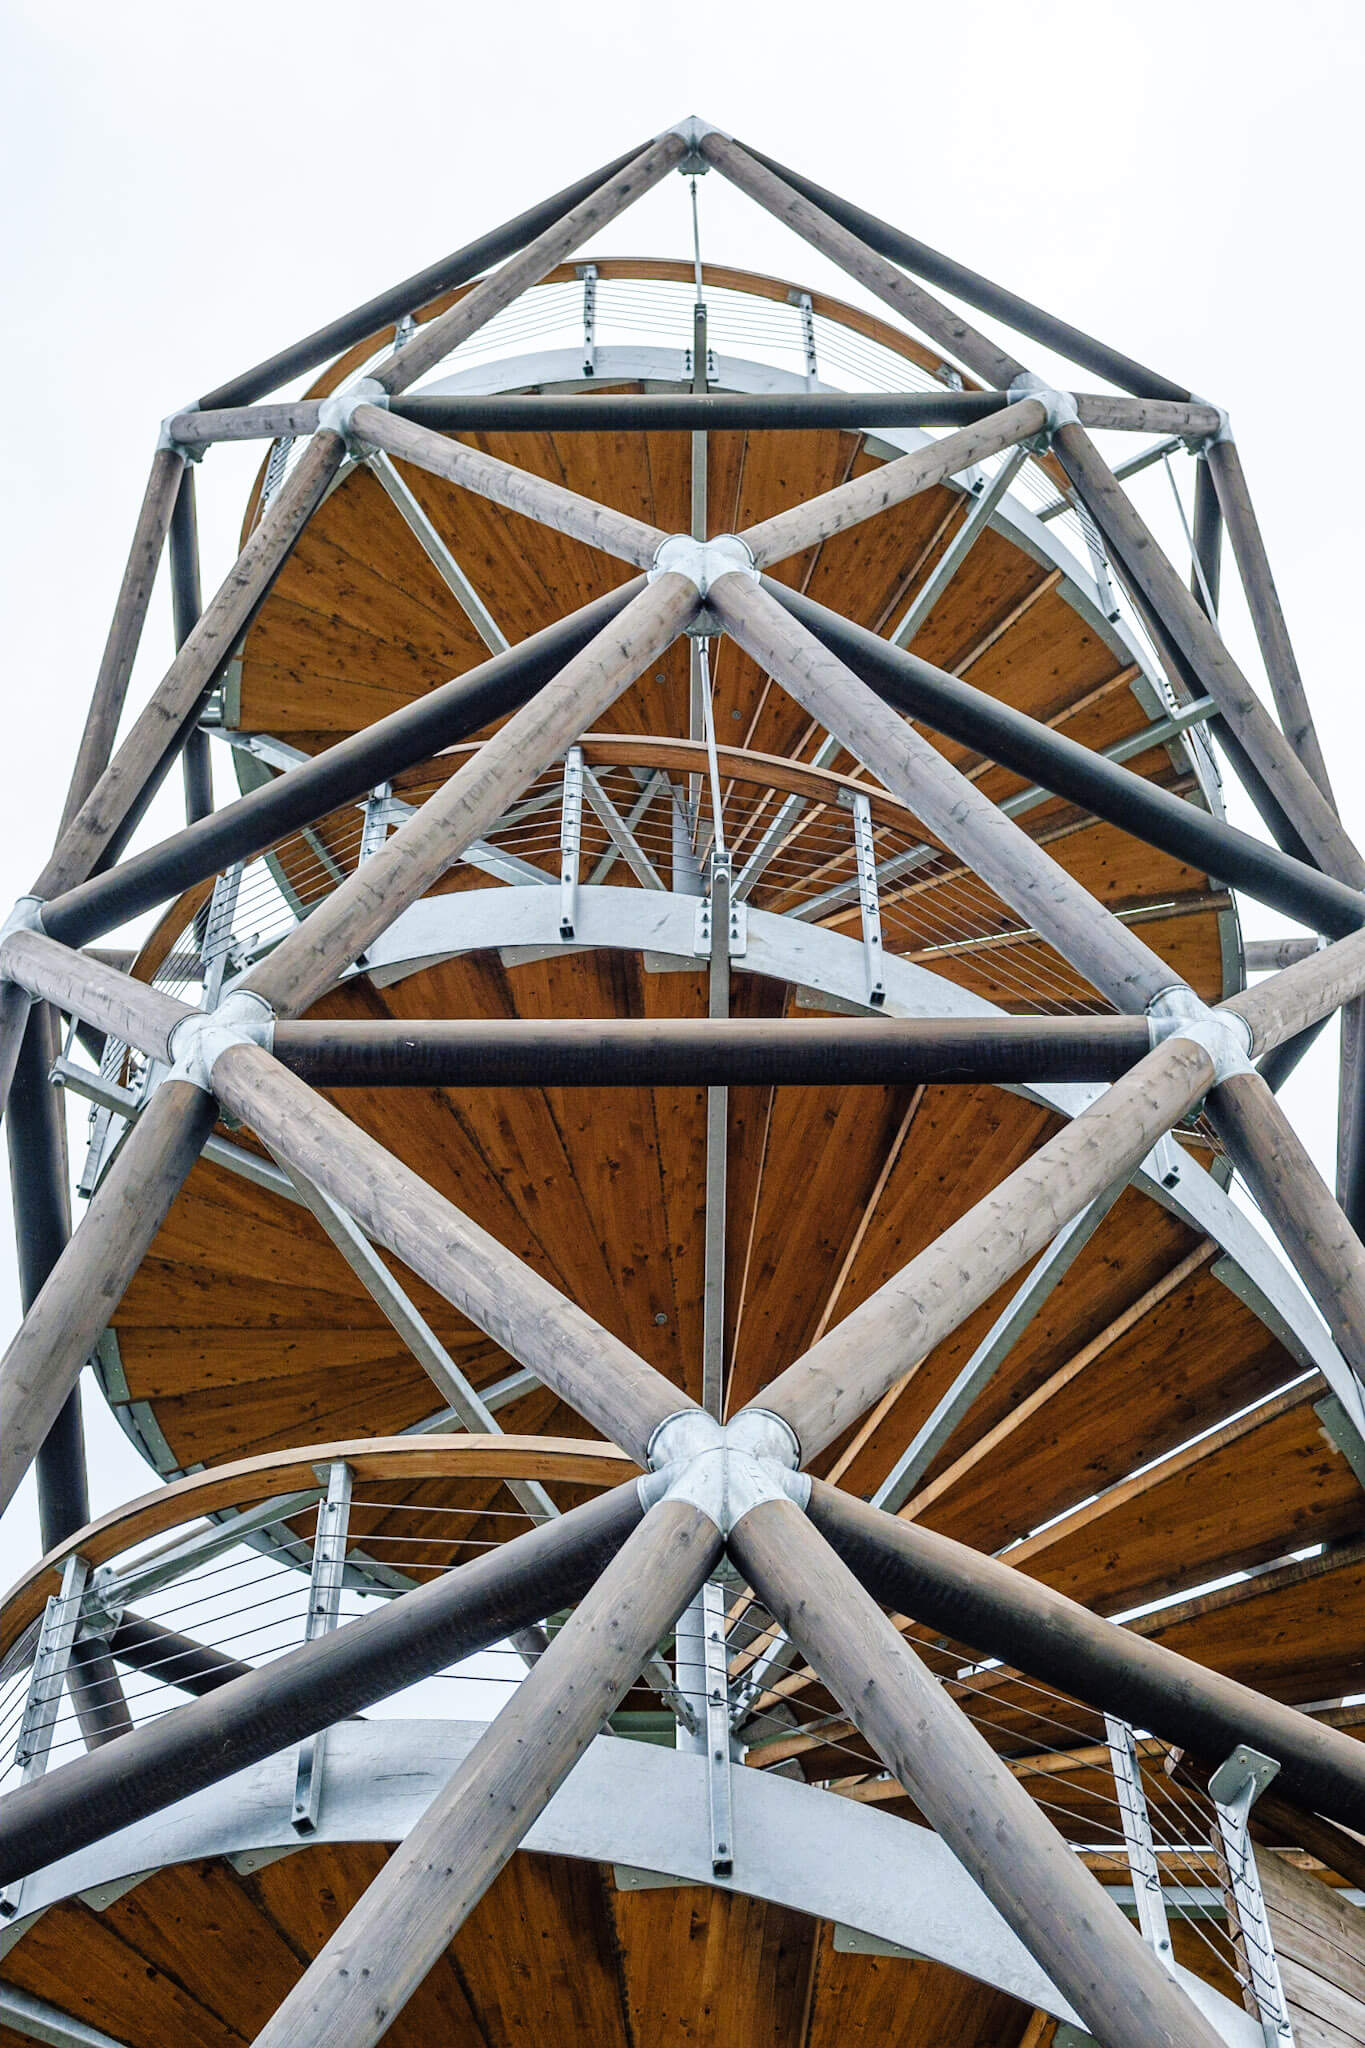 The tour de l'innovation viewing tower near Saint-Jean-Port-Joli